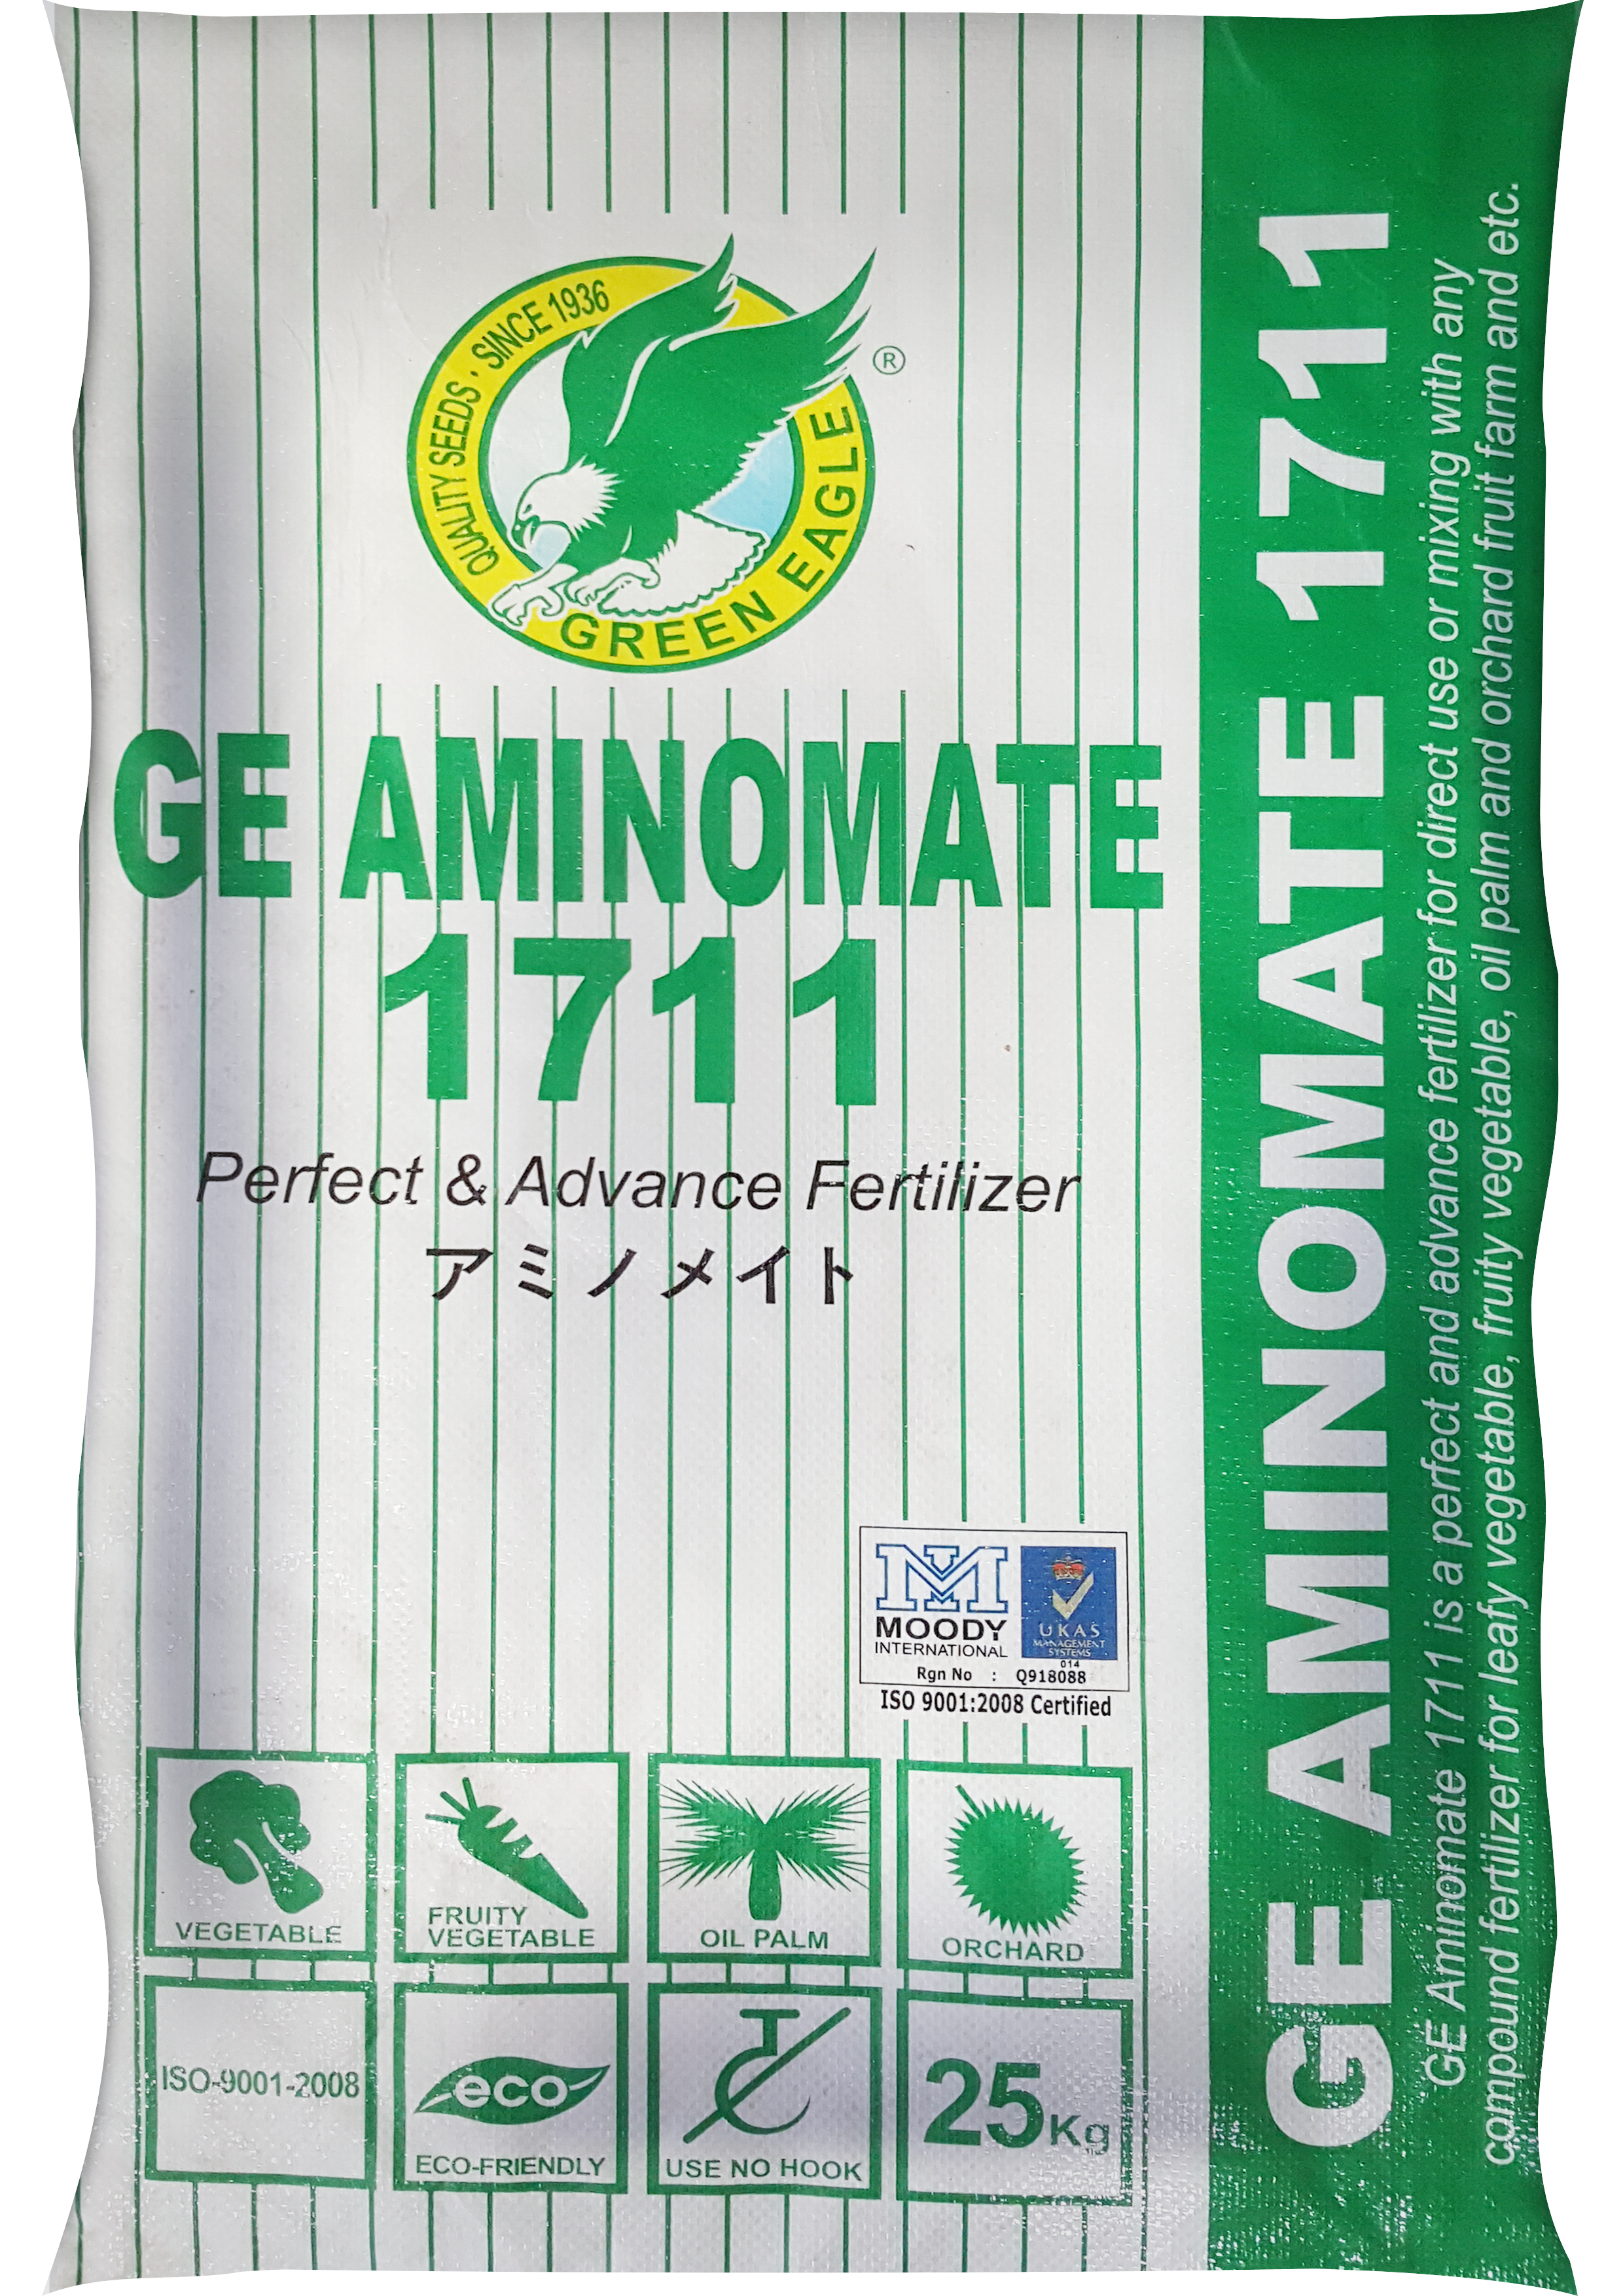 GE 1711 Aminomate bag design (use this)